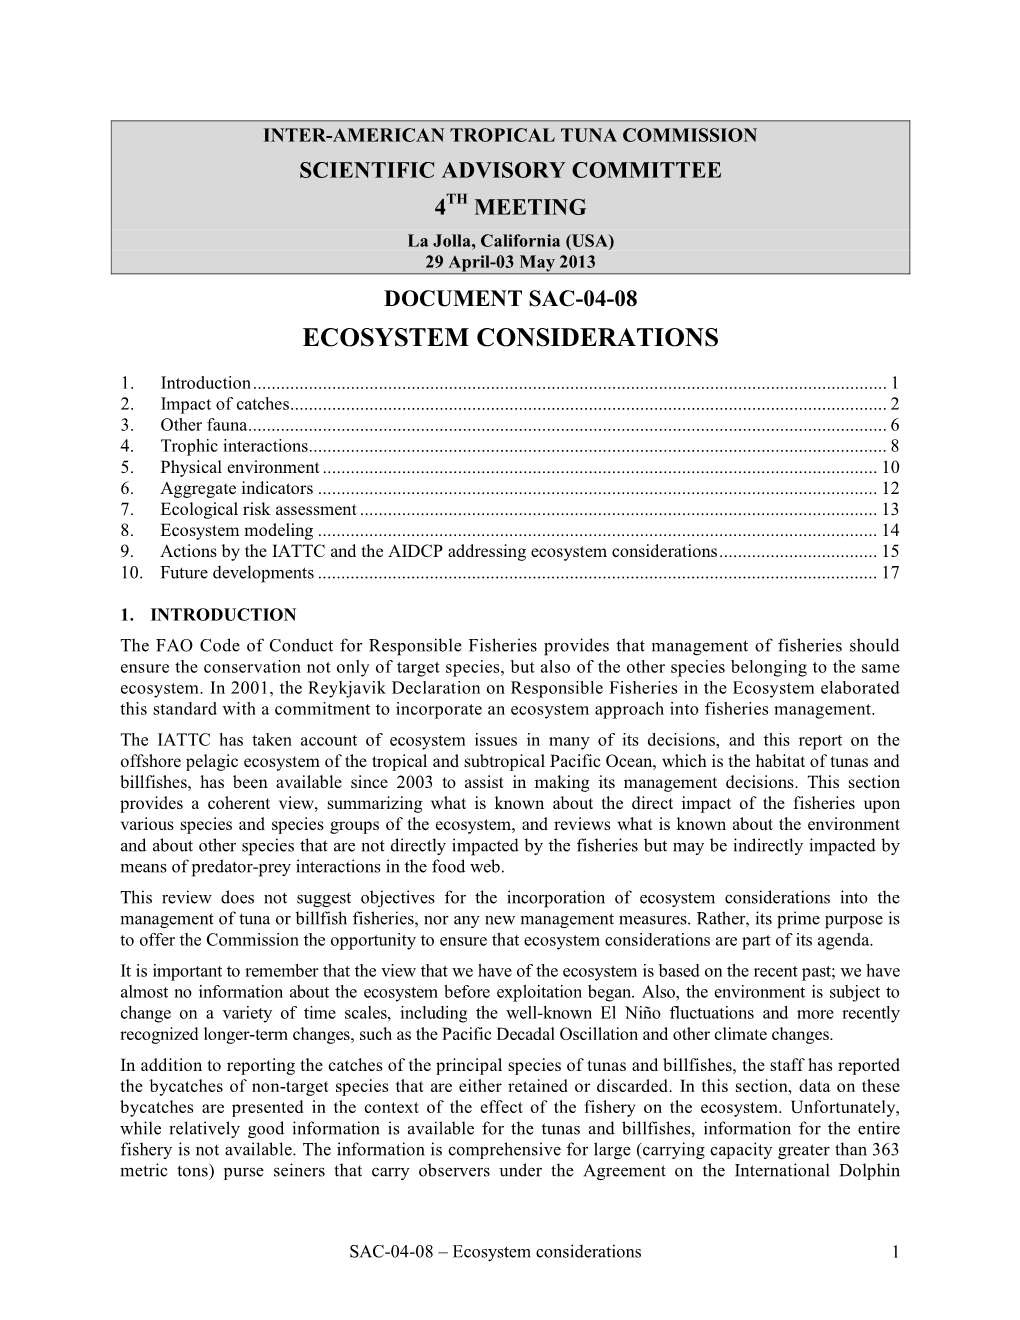 Sac-04-08 Ecosystem Considerations